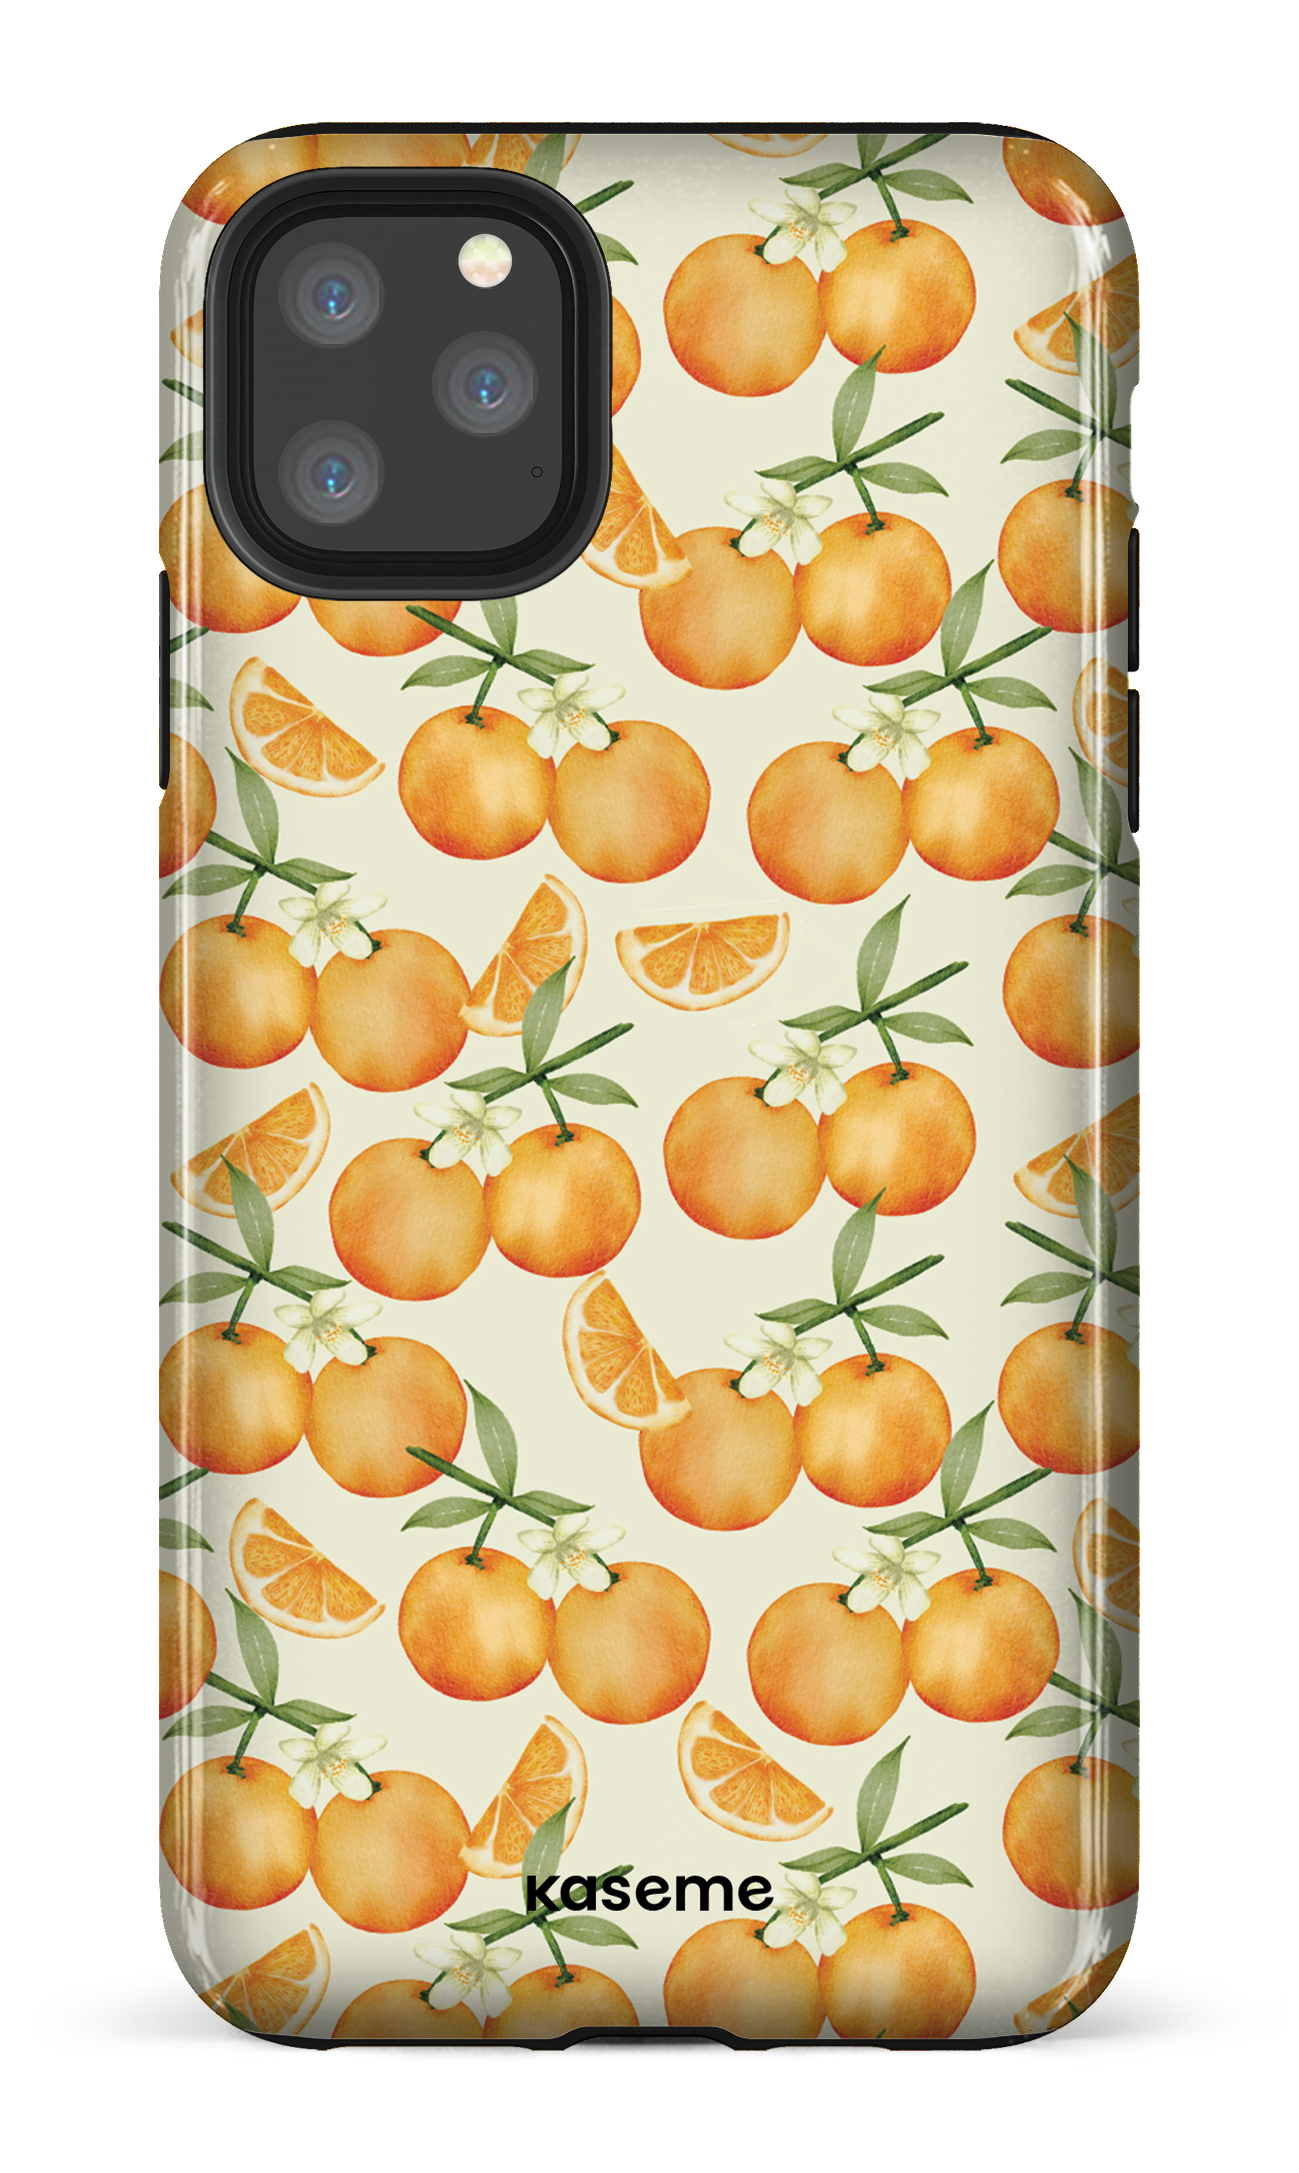 Tangerine - iPhone 11 Pro Max